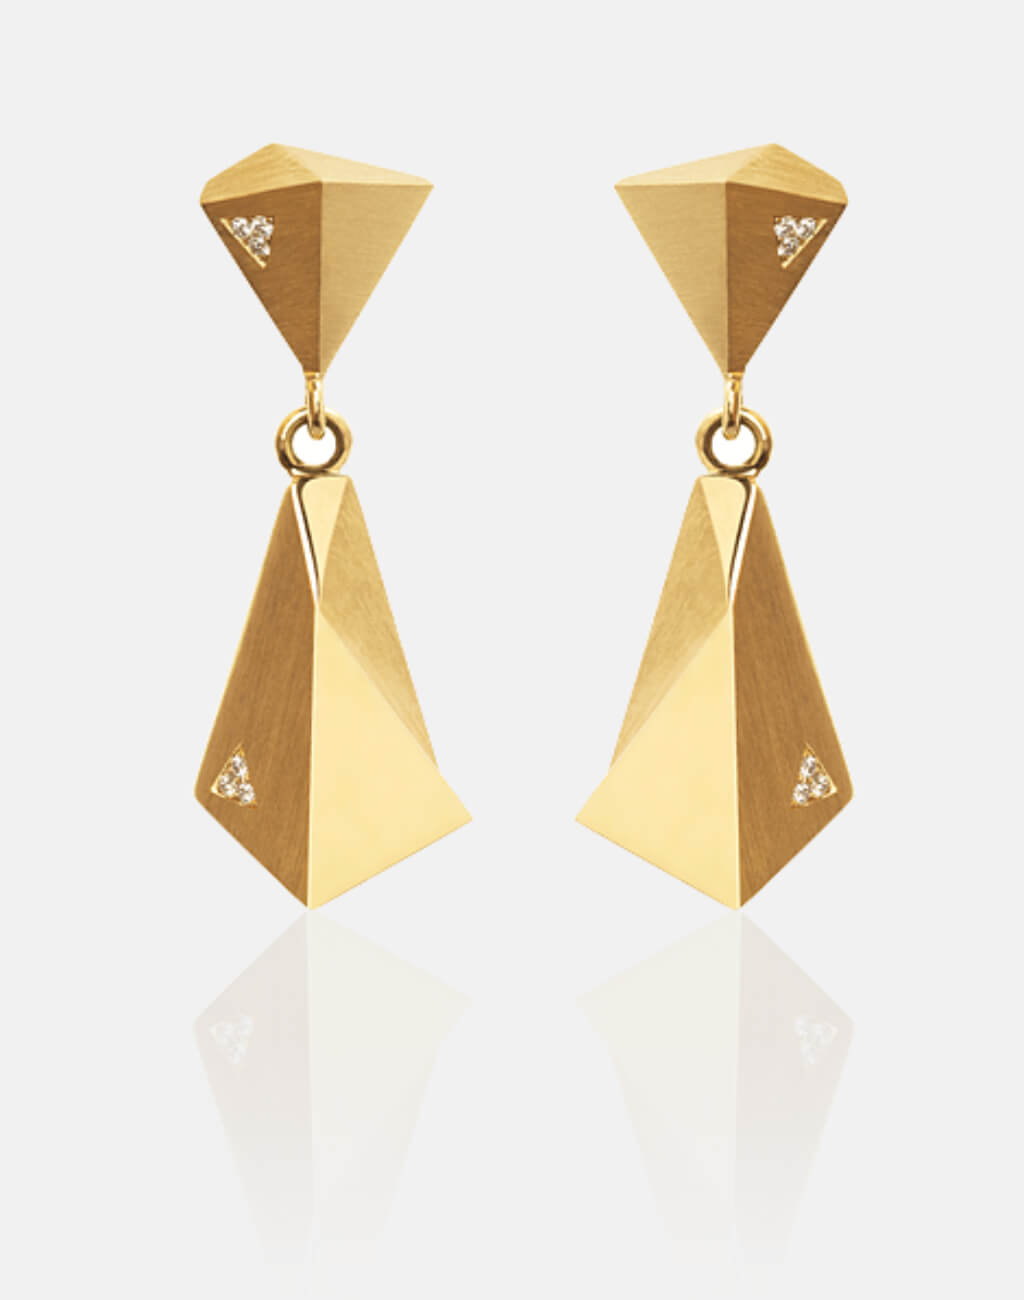 Stealth | Ohrringe, Ohrhänger 750/- Gelbgold, 12 Brillanten, Diamanten | earrings 18kt yellow gold, diamonds | SYNO-Schmuck.com